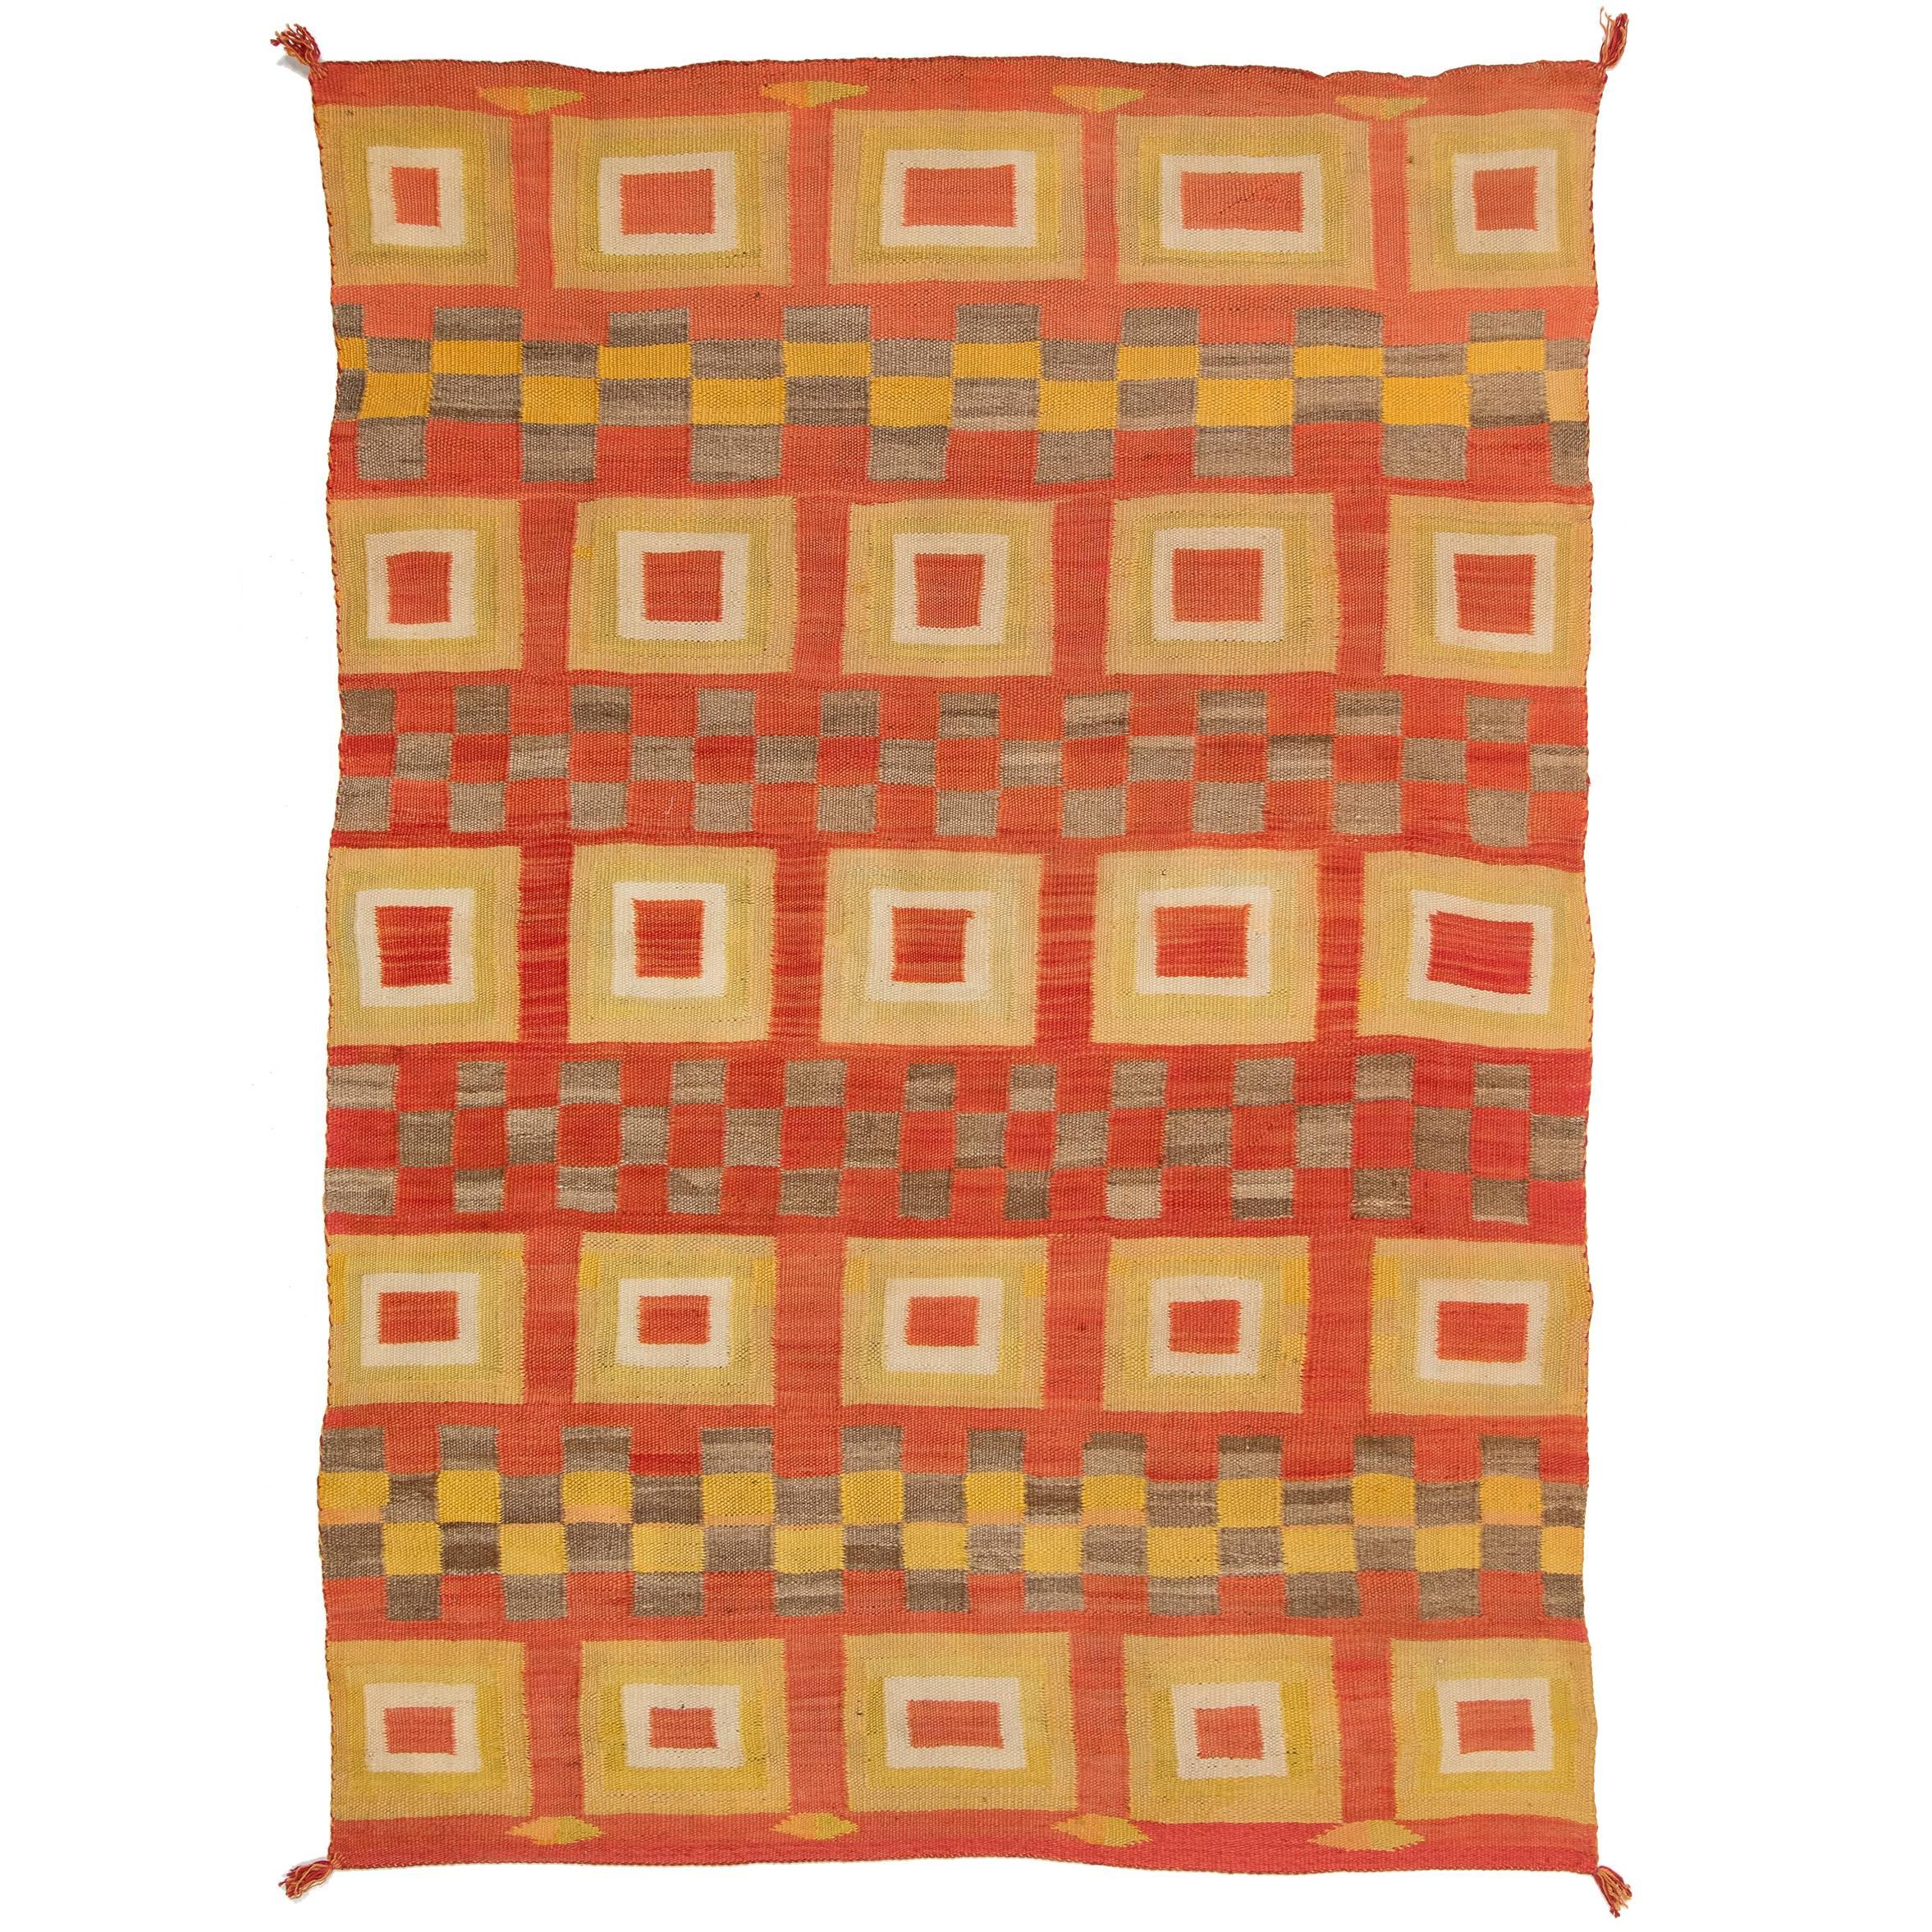 Antique Native American Transitional Blanket, Navajo Textile, circa 1900